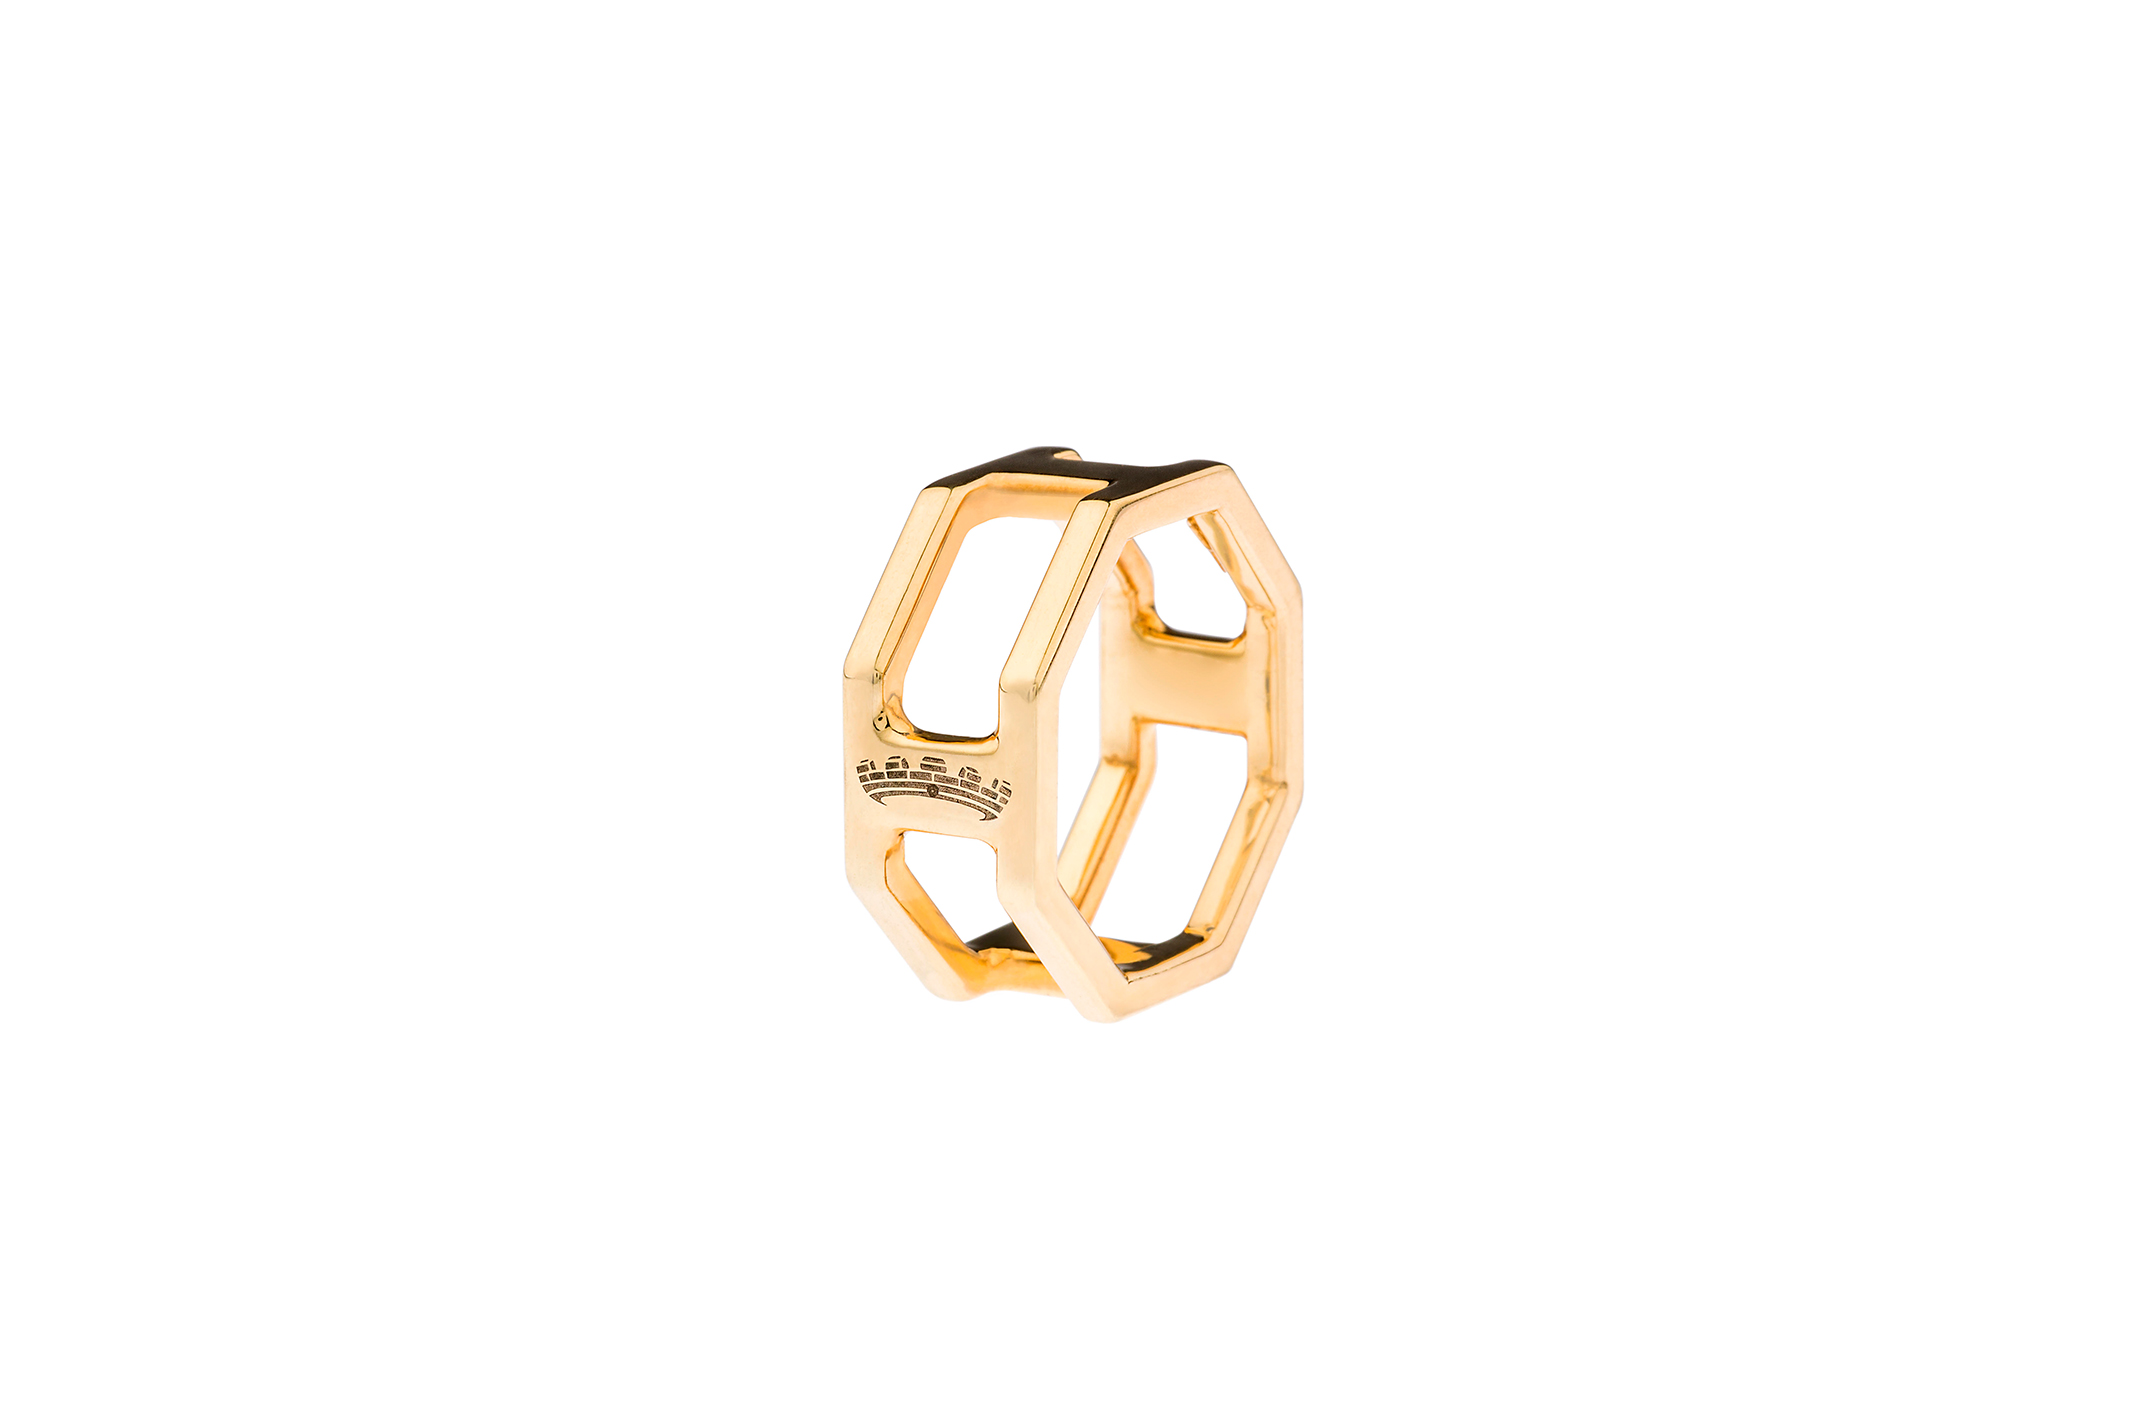 Joia: anel;Material: prata 925;Cor: amarelo;Género: mulher